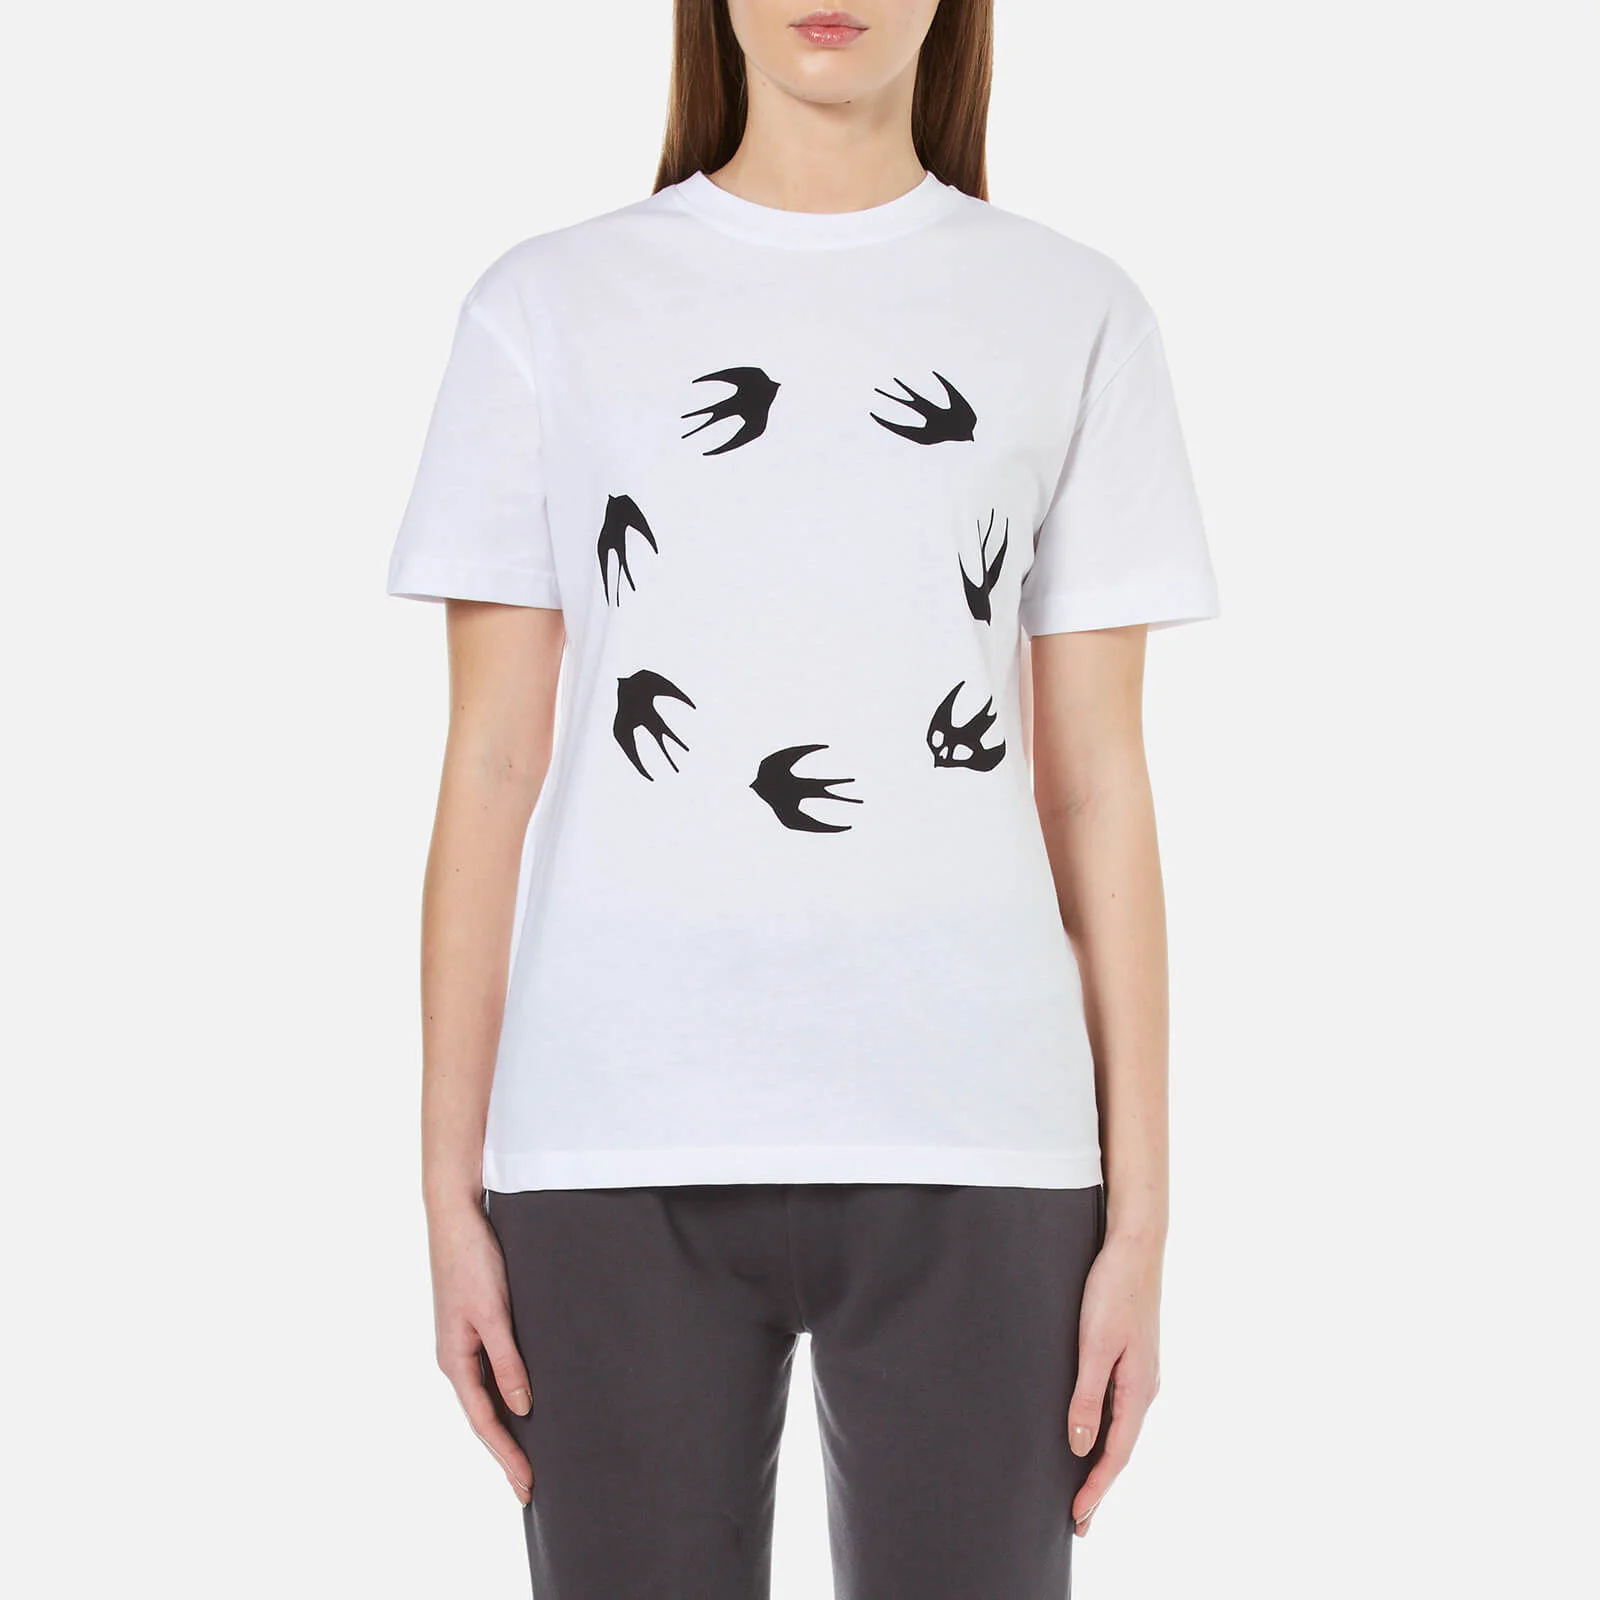 McQ Alexander McQueen Women's Classic Circle Swallow T-Shirt - Optic White Image 1